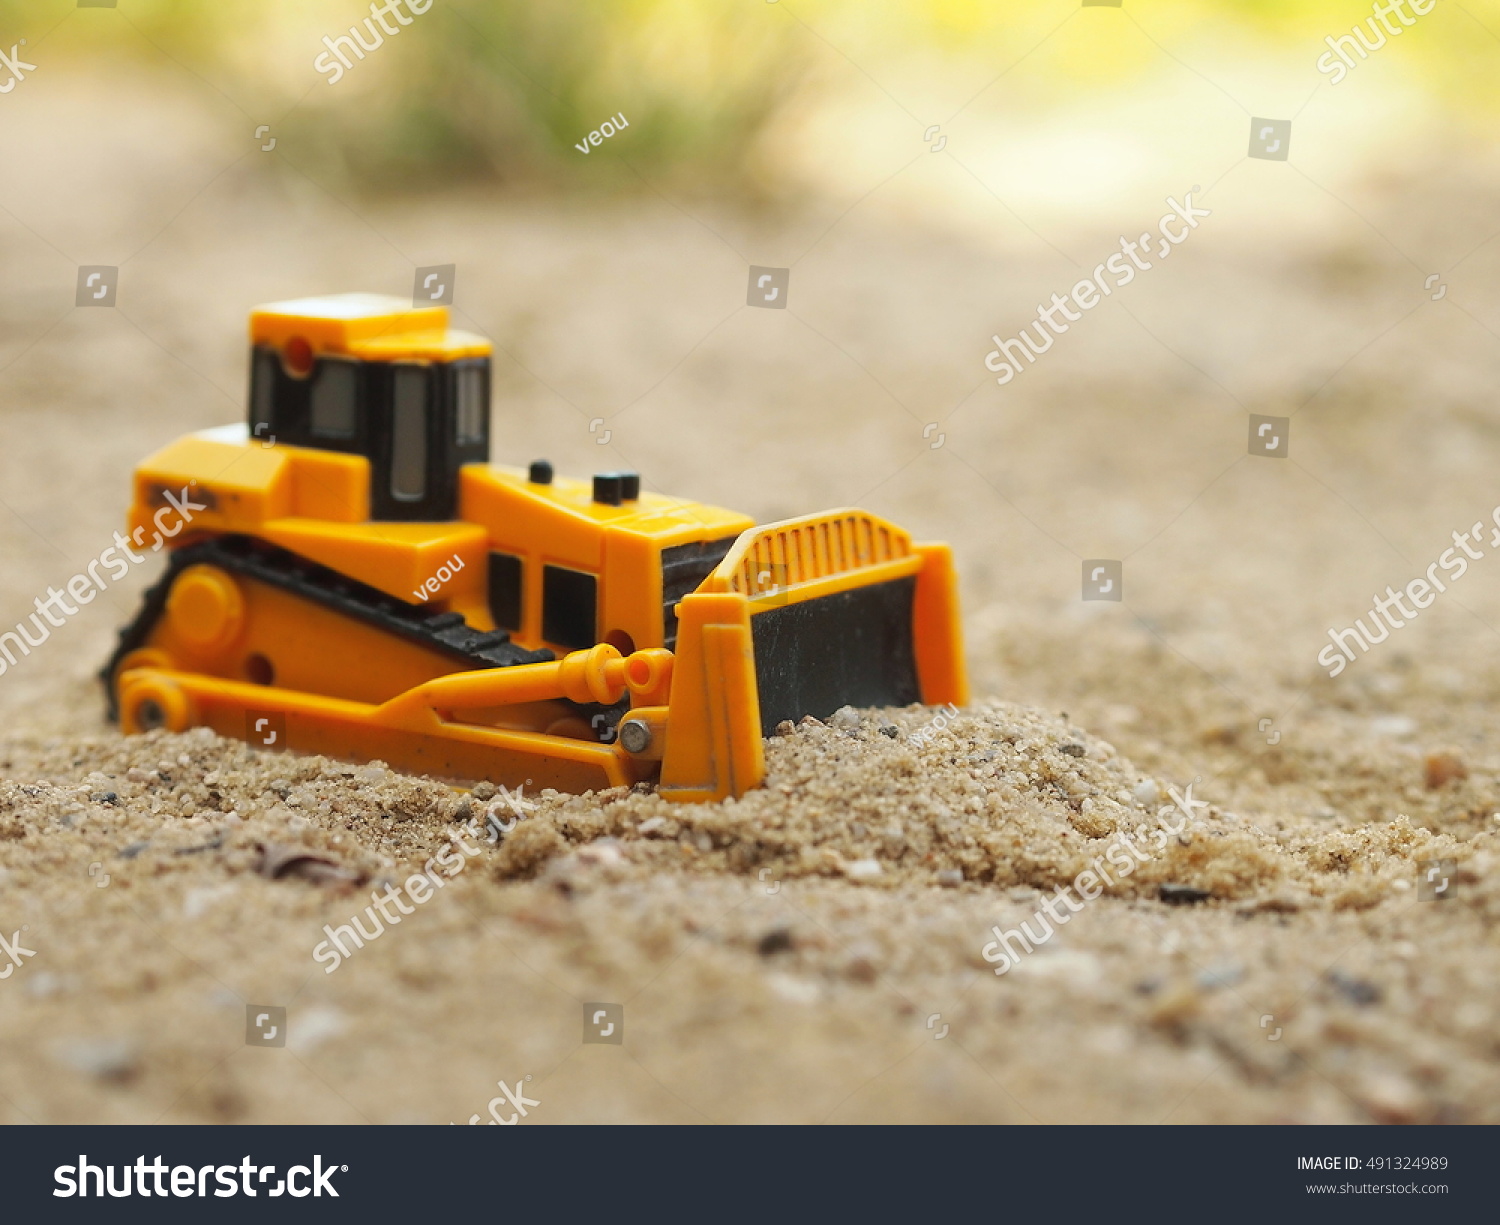 sandpit excavator toy